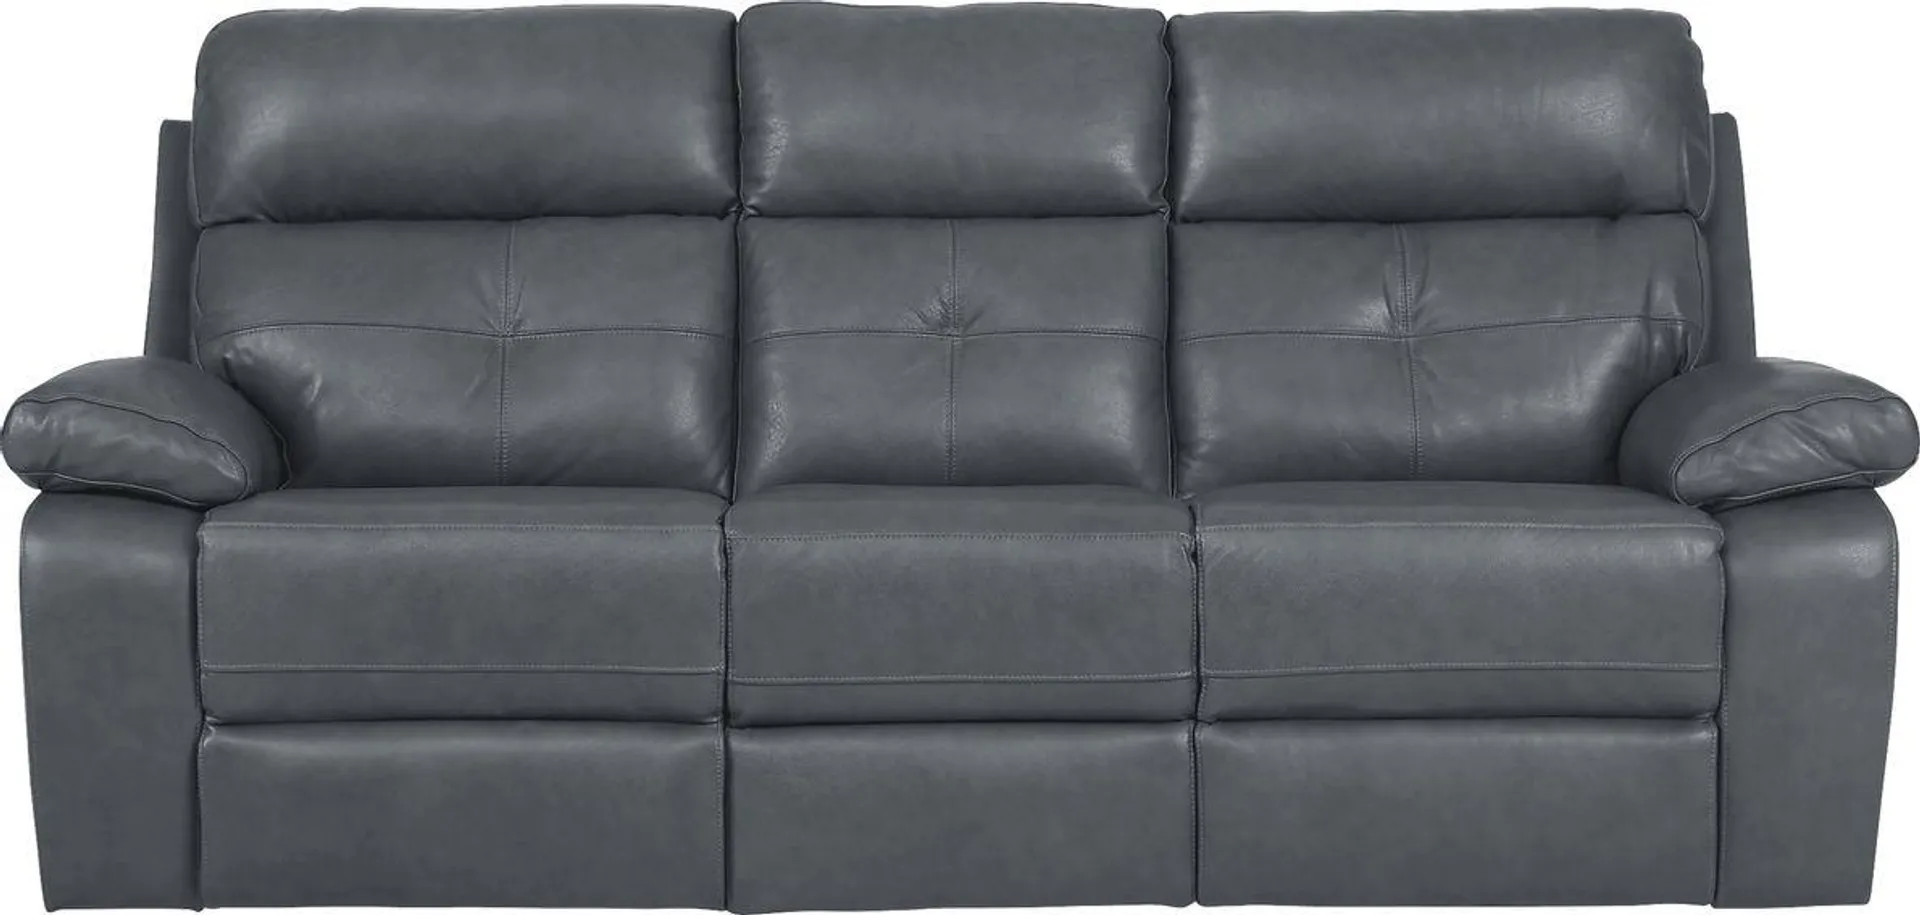 Cepano Leather Non-Power Reclining Sofa